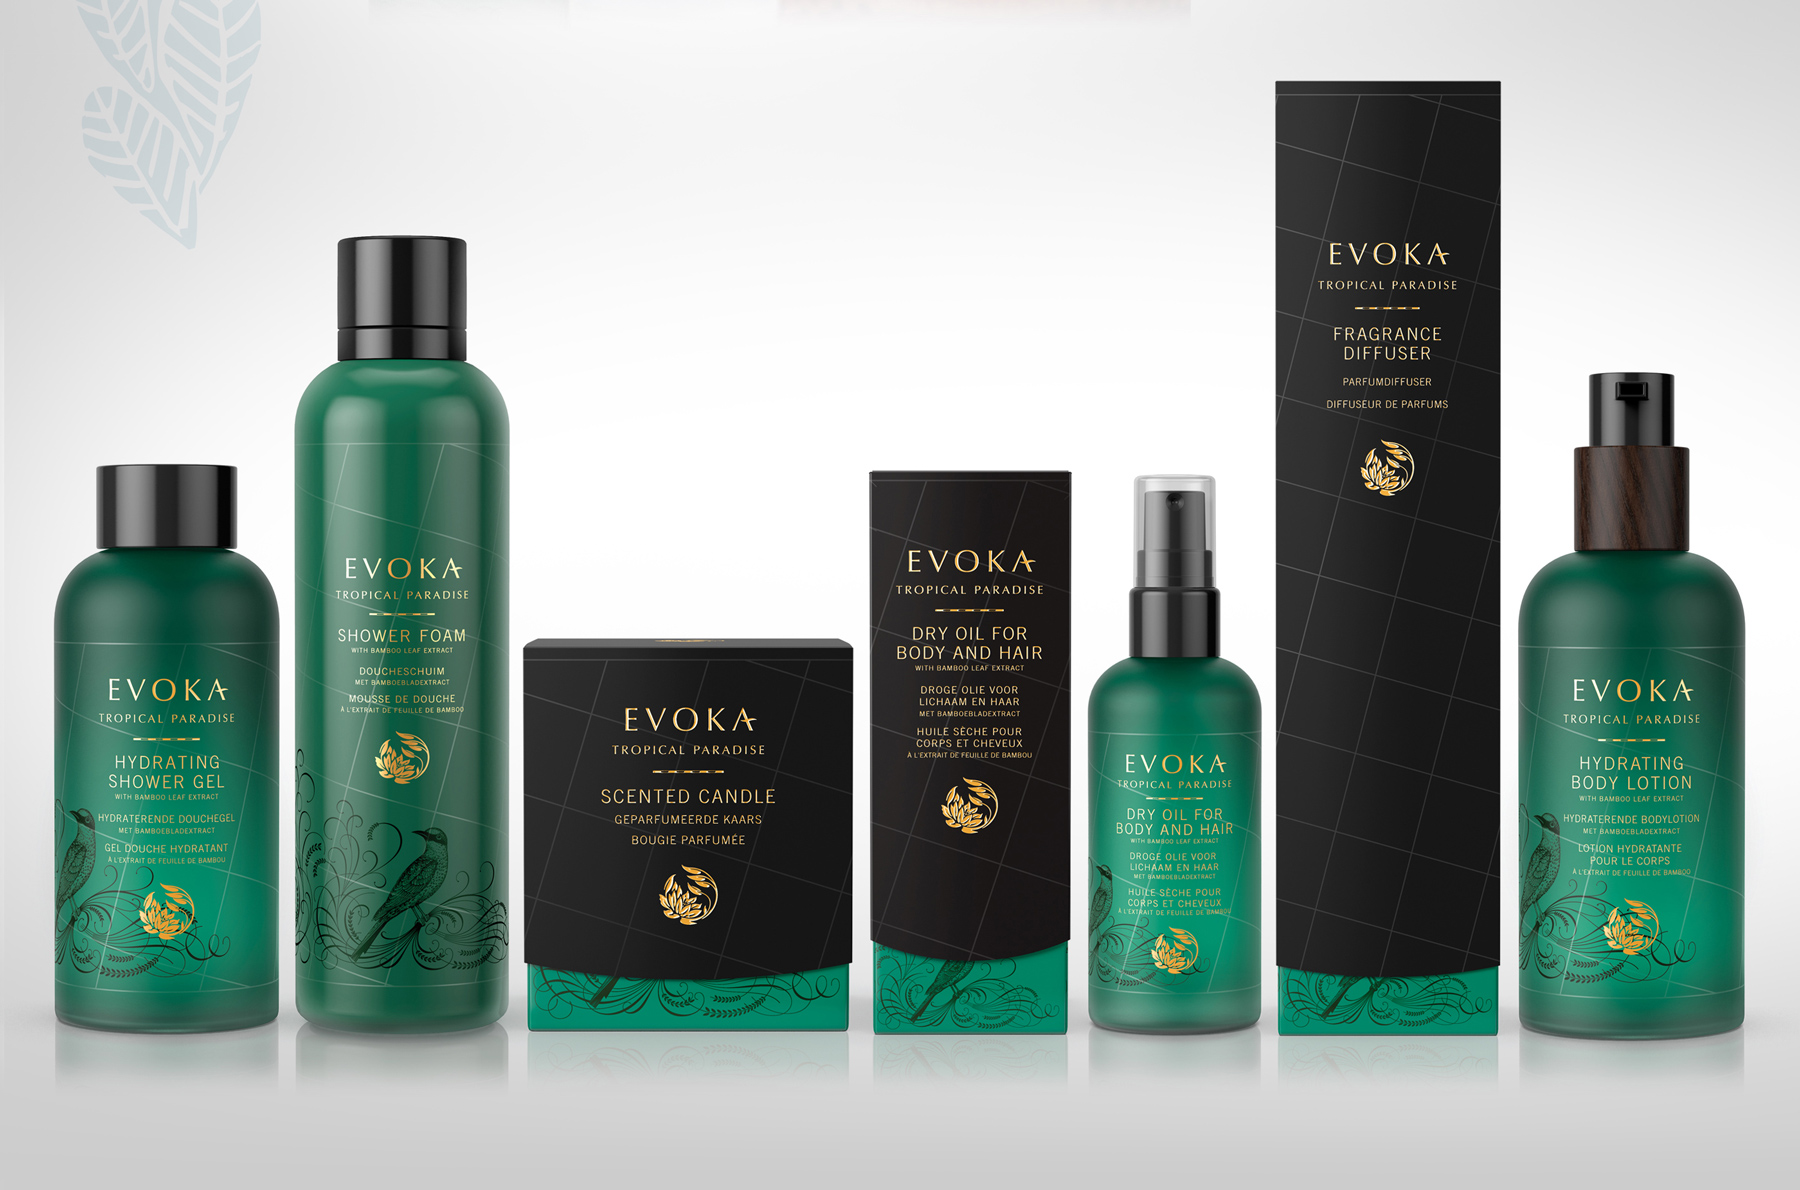 Evoka product range featuring branding by Biles Hendry